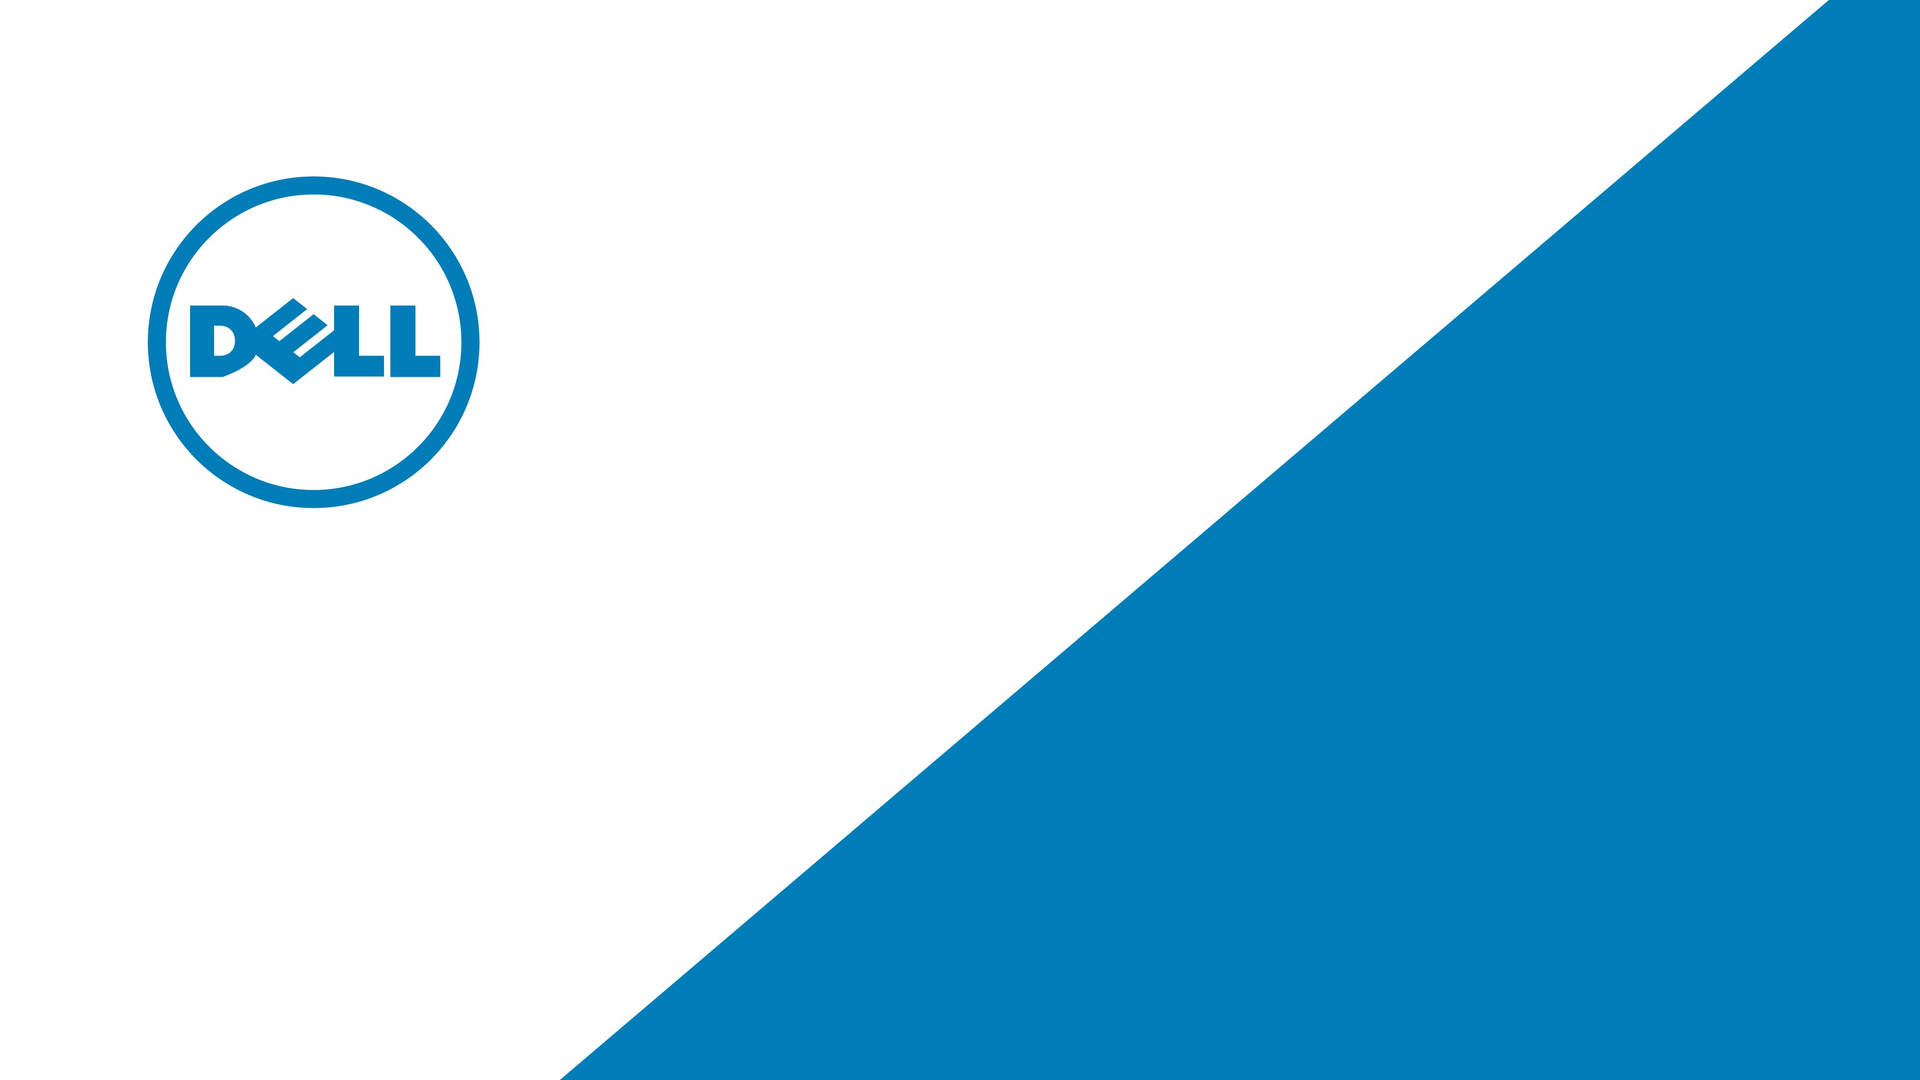 4k White And Blue Dell Logo